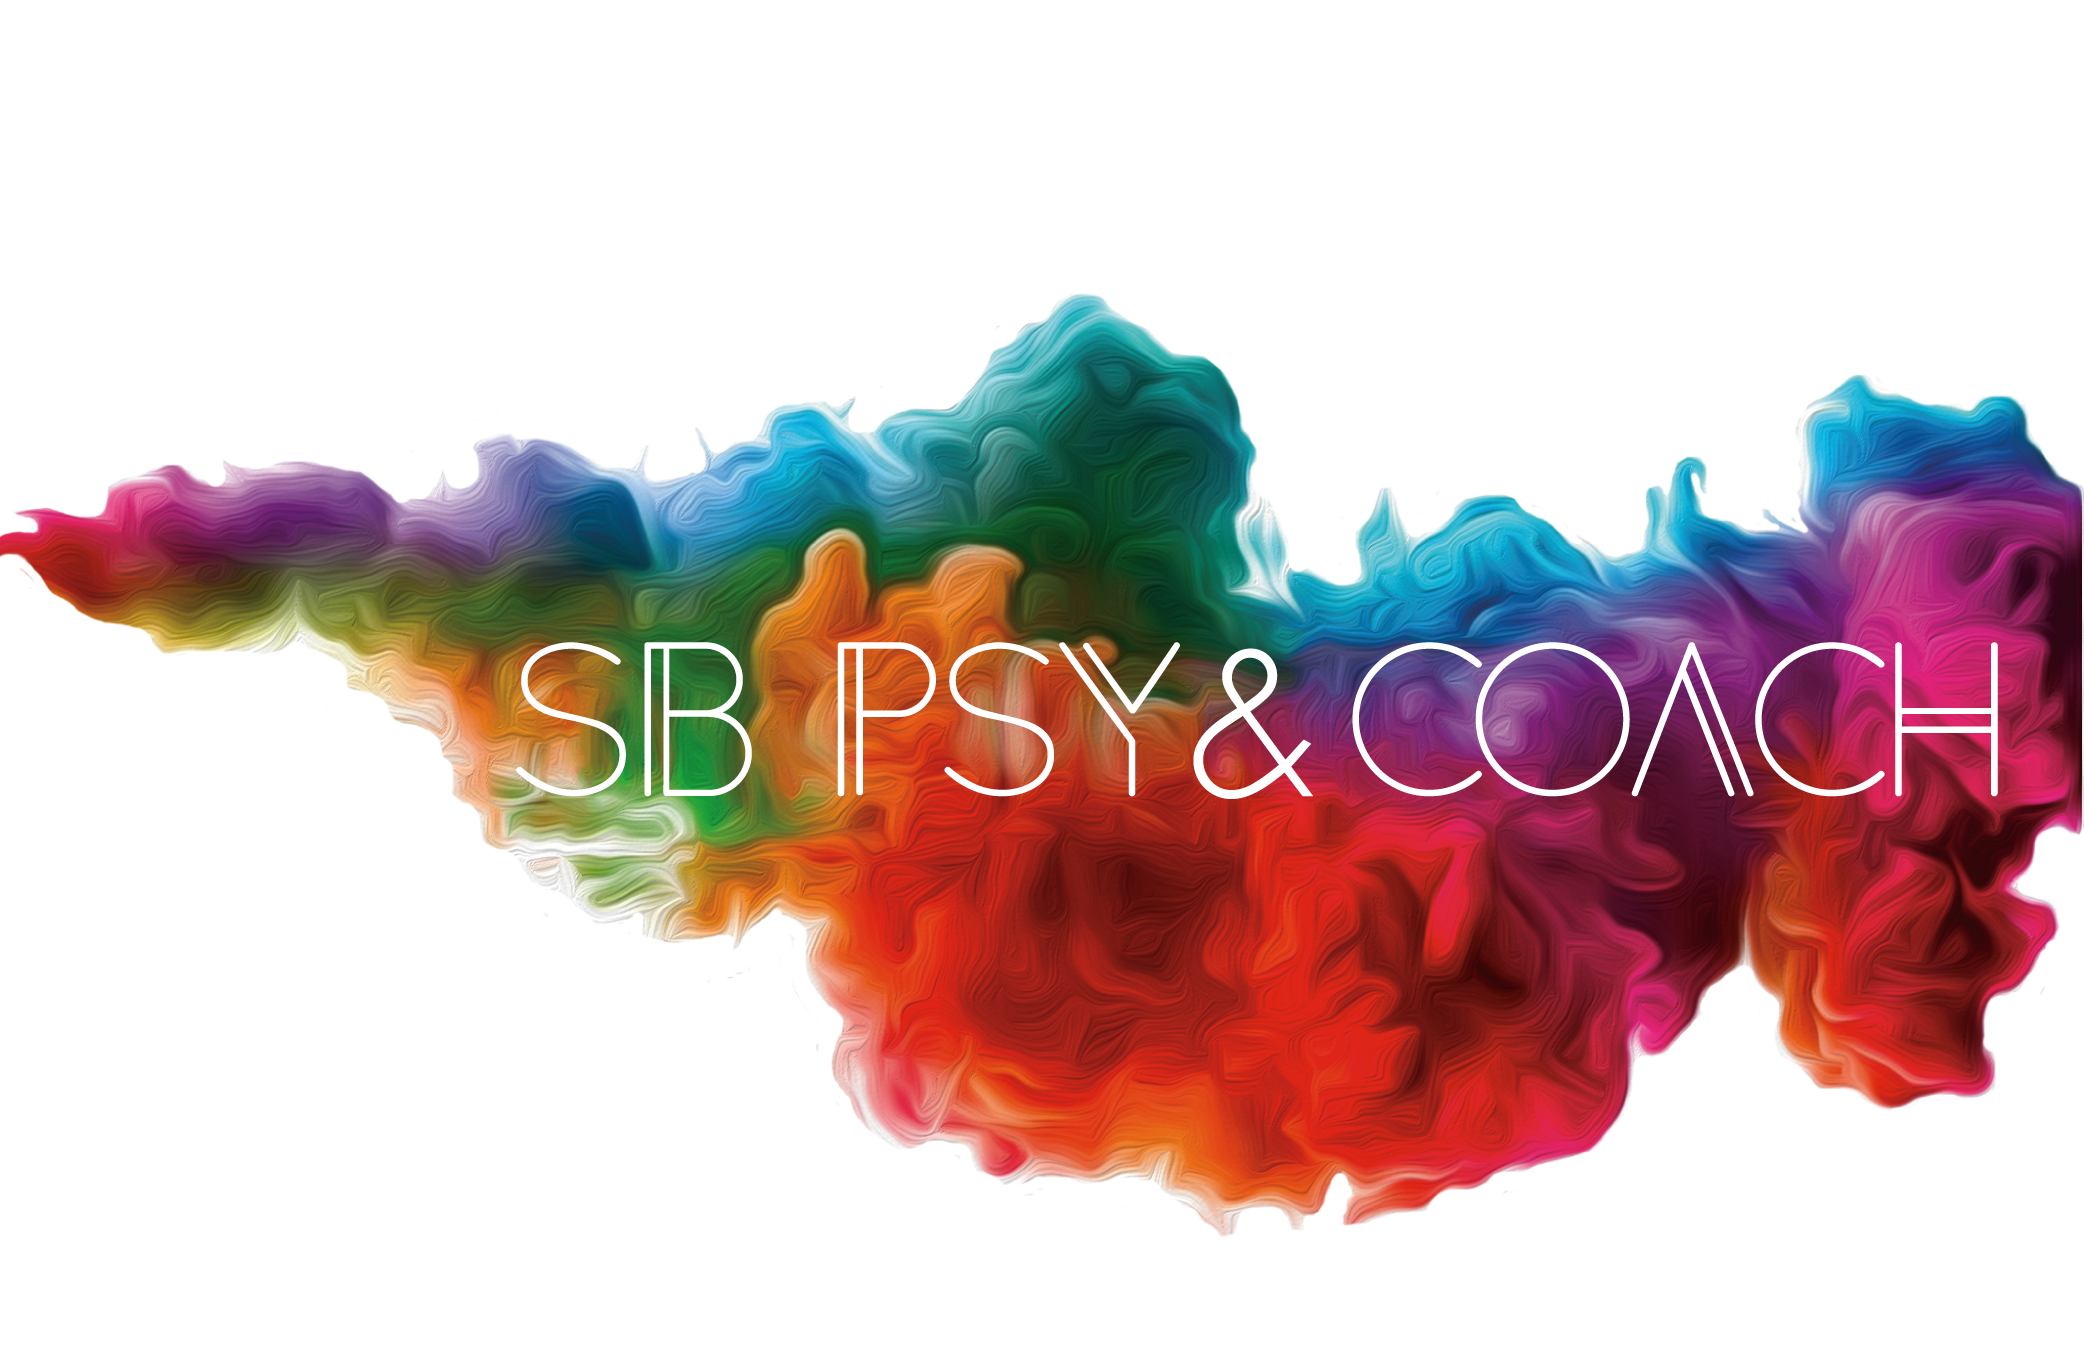 SB PSY & COACH